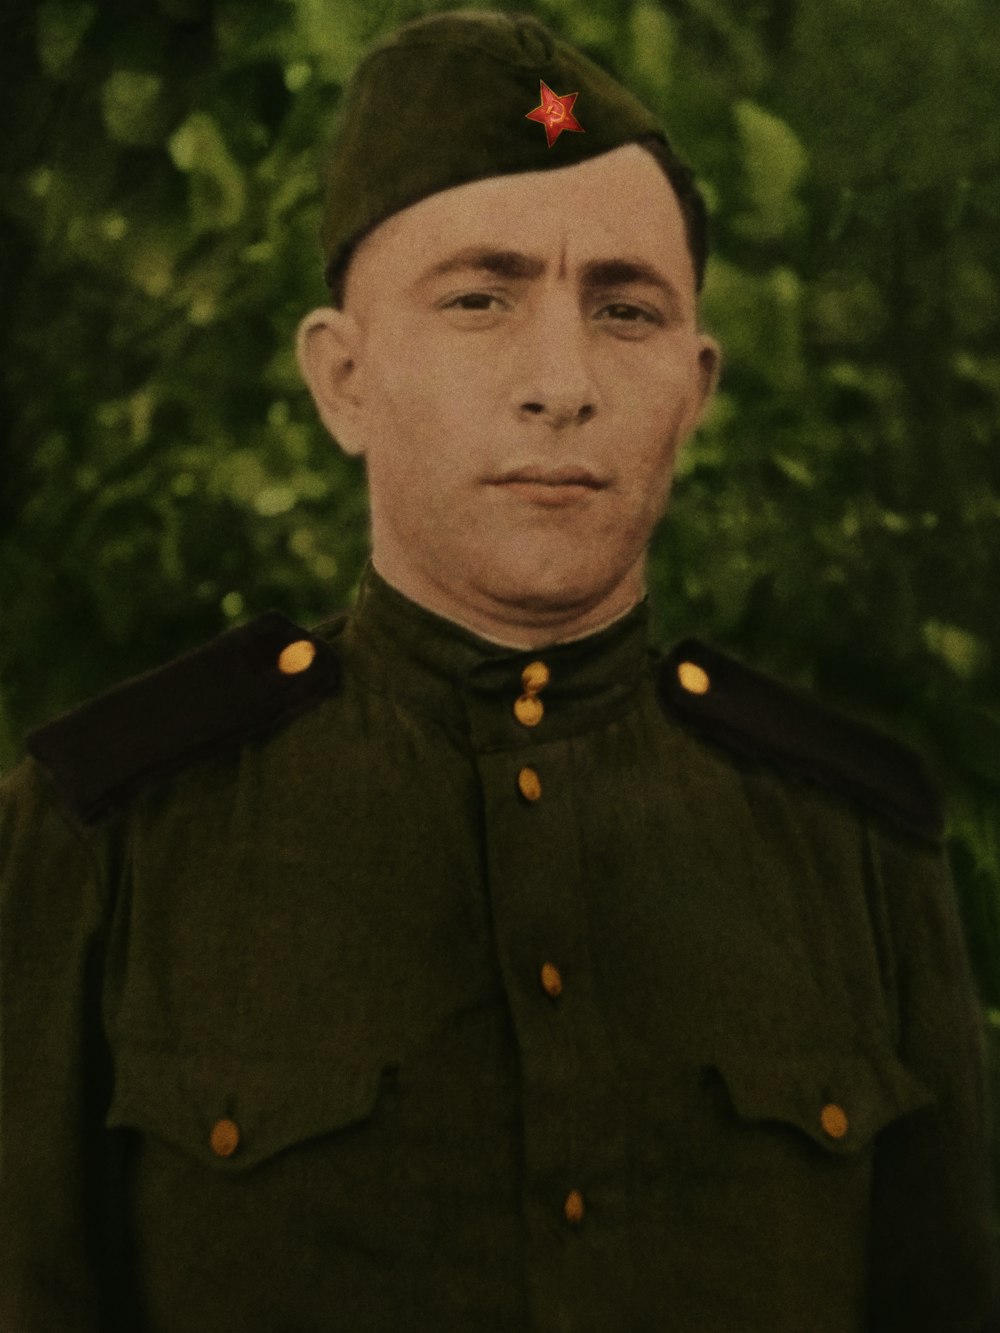 man wearing green soldier suit